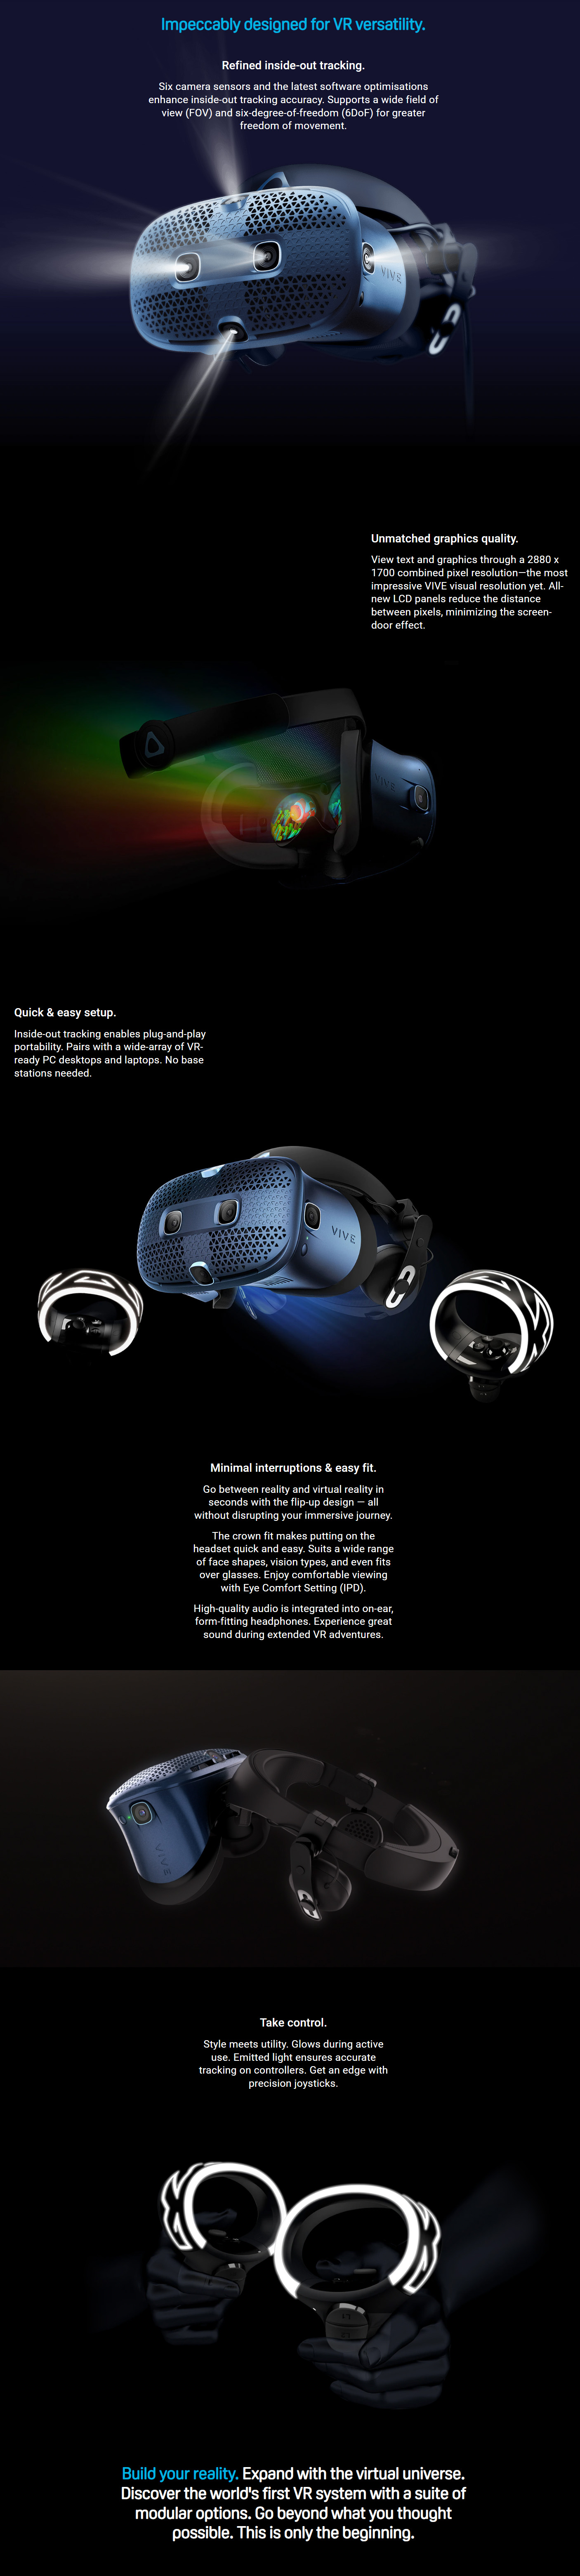 Virtual-Reality-HTC-VIVE-Cosmos-PC-VR-Headset-Kit-1